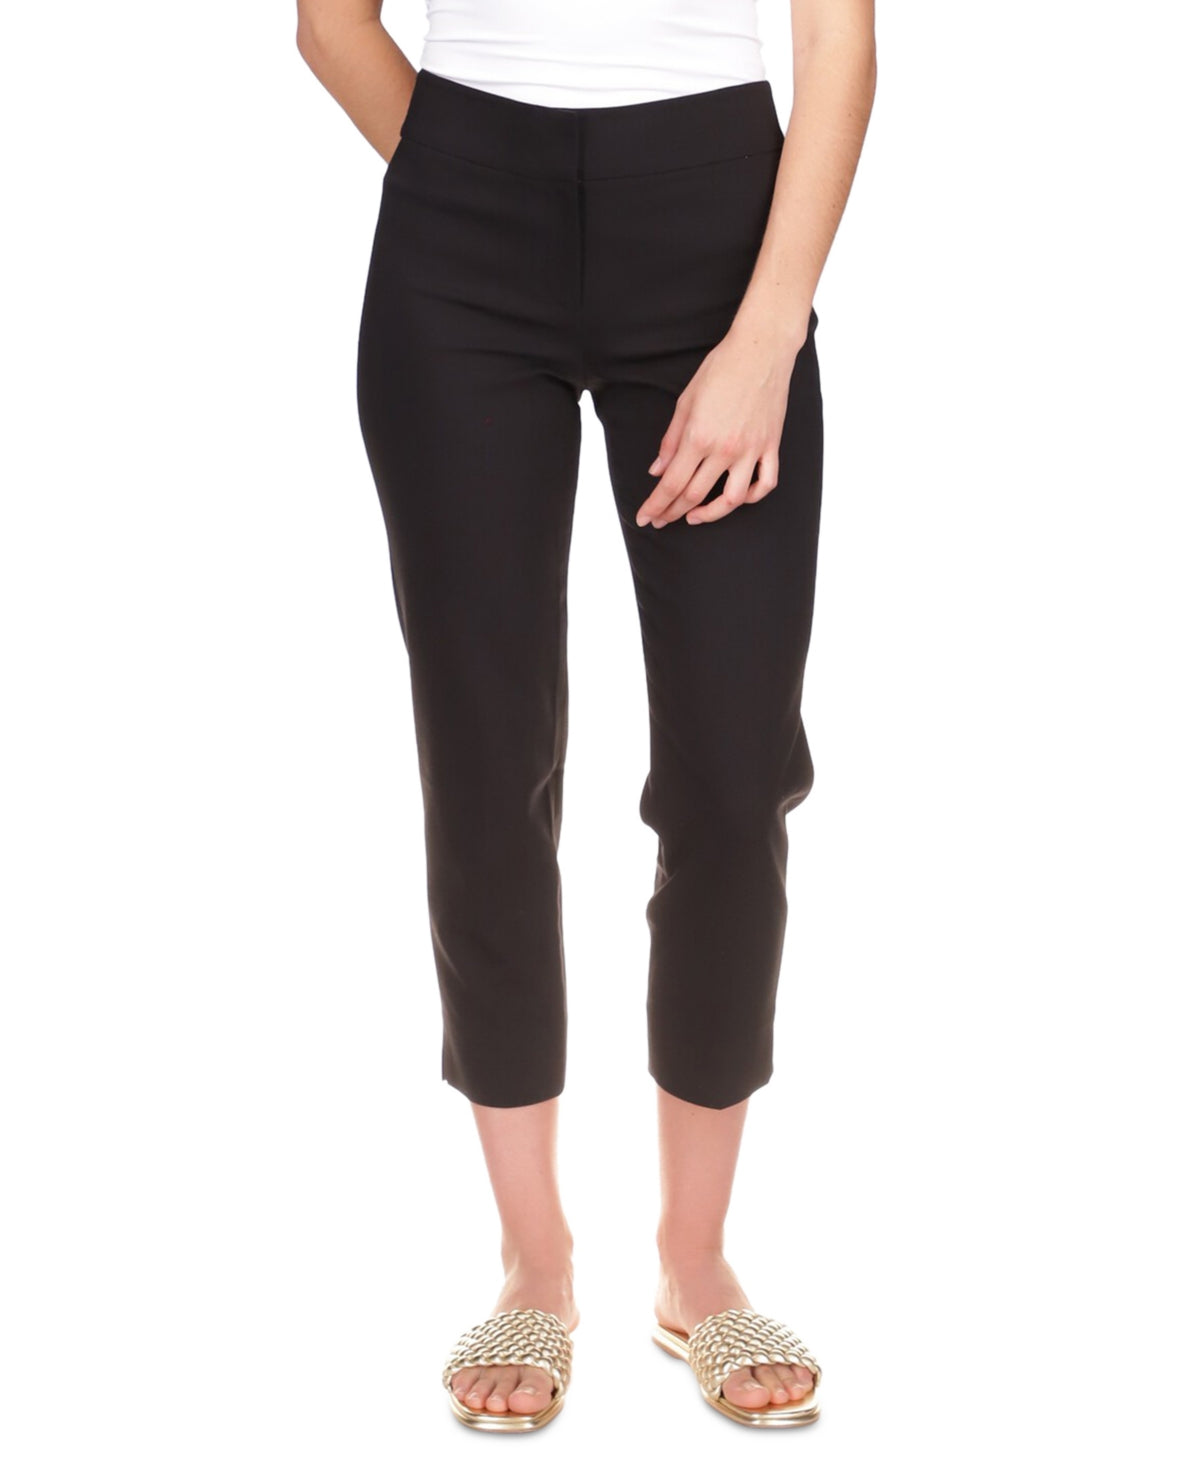 Michael Kors Women's Slit Capri Pants Black Size 6 – Steals